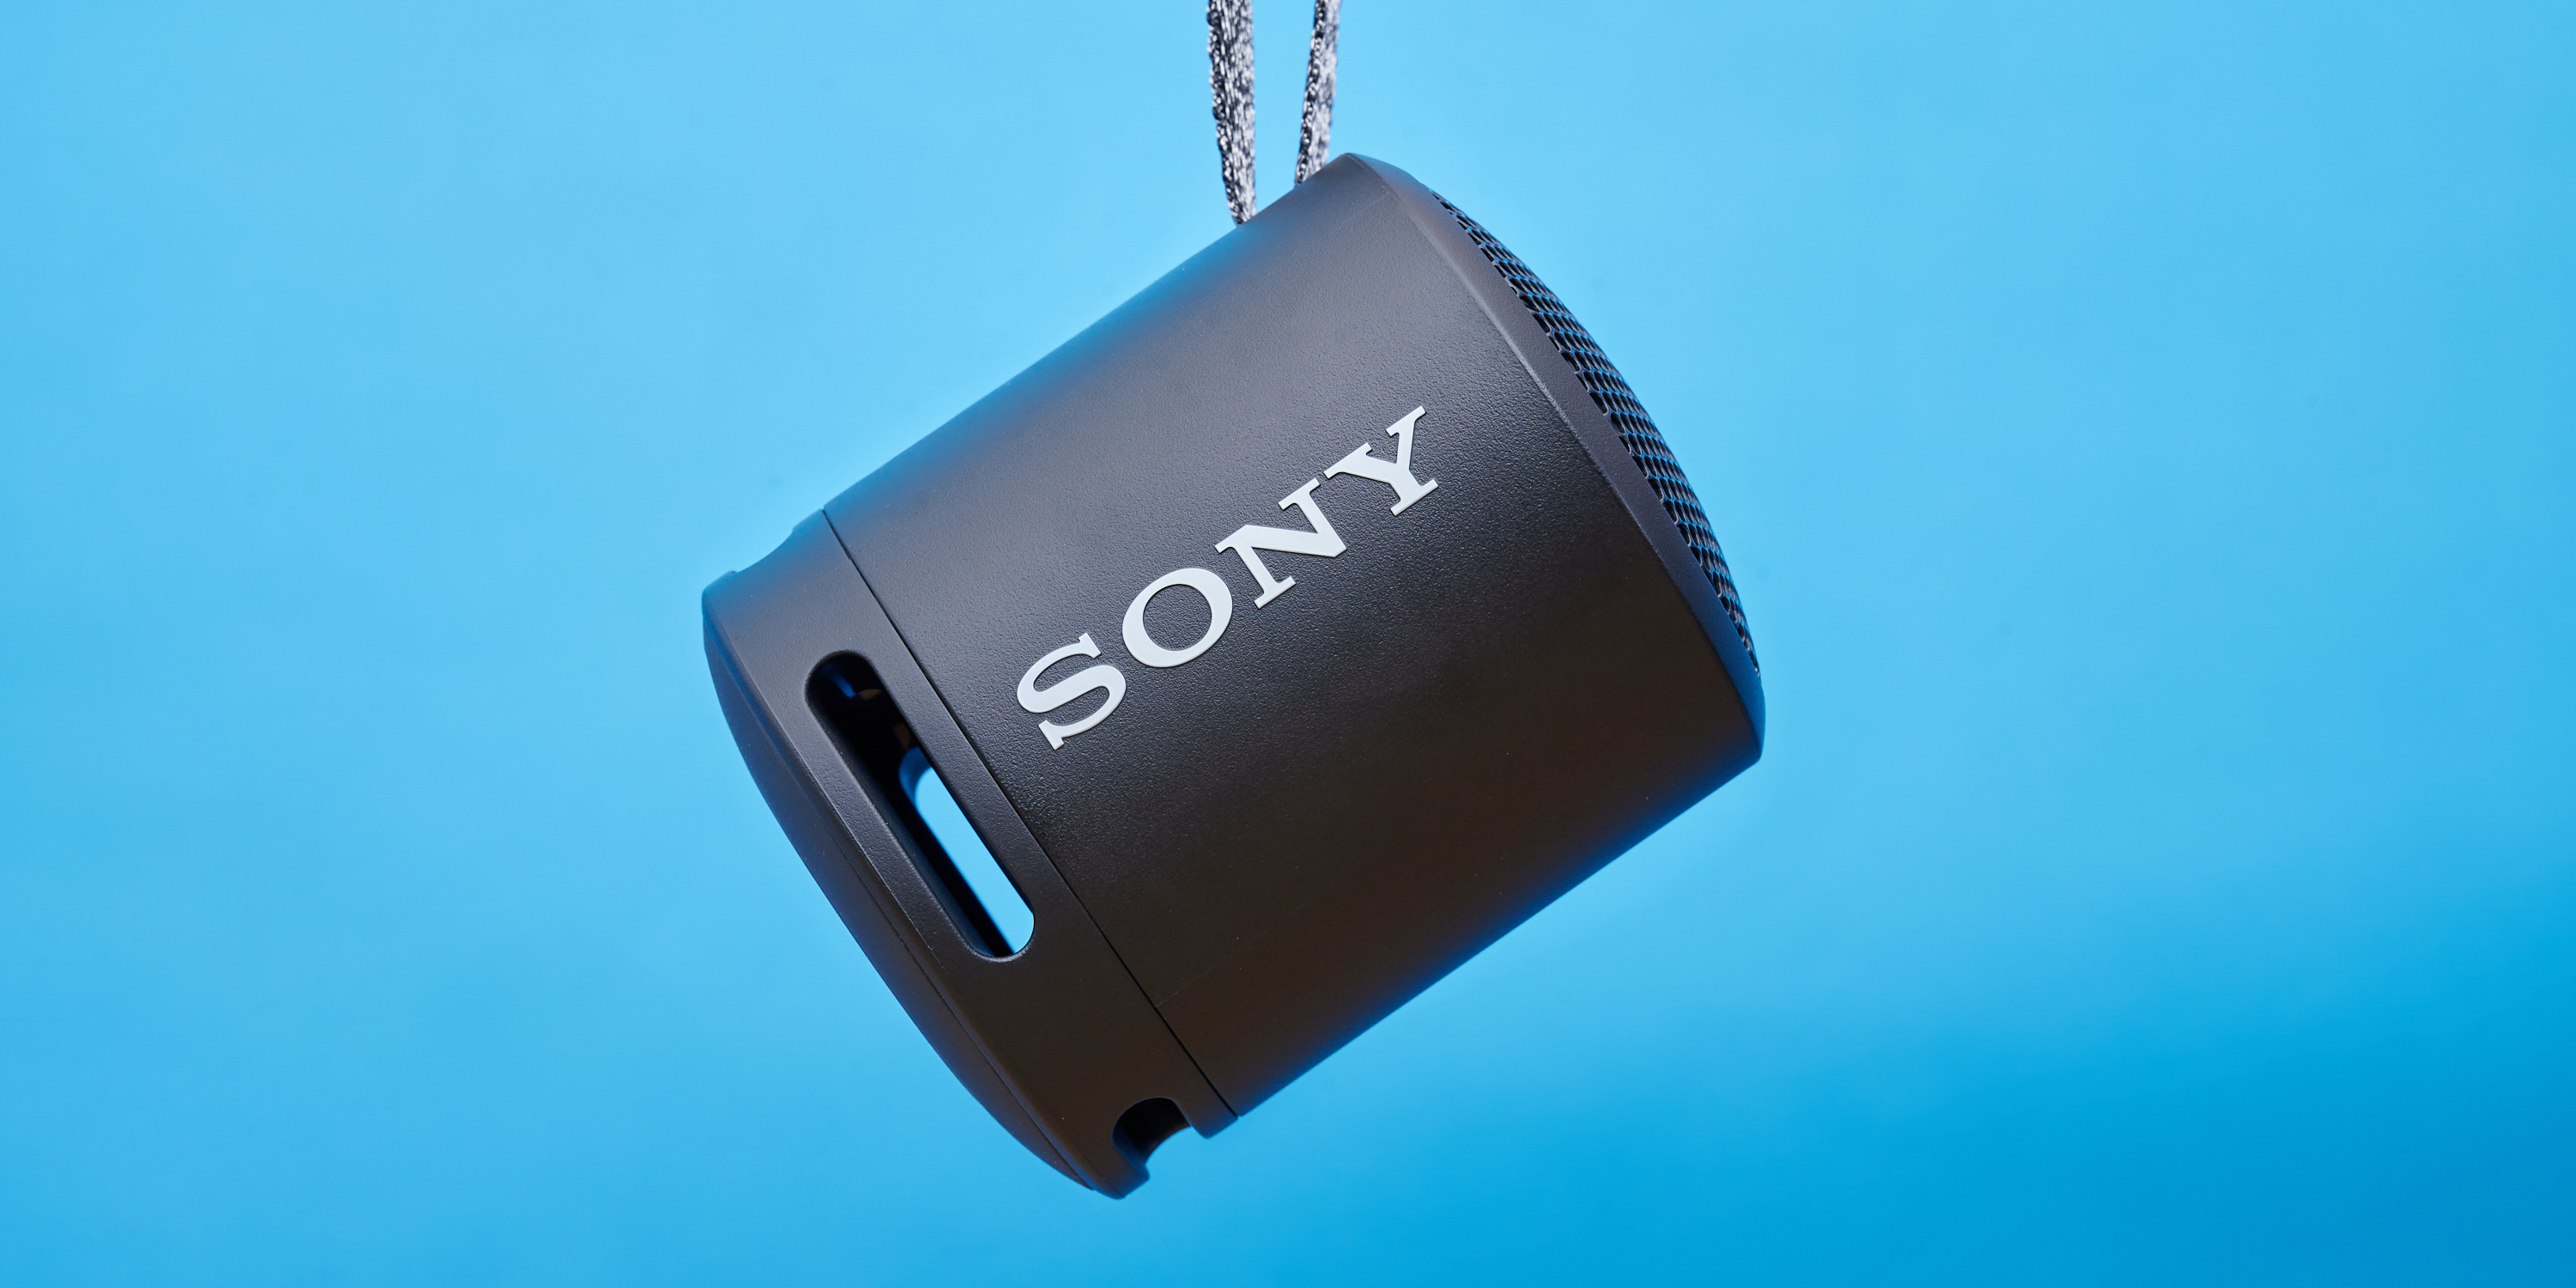 Sony SRS-XB13 im Test: Wie gut ist Sonys kleinste Bluetooth-Box?